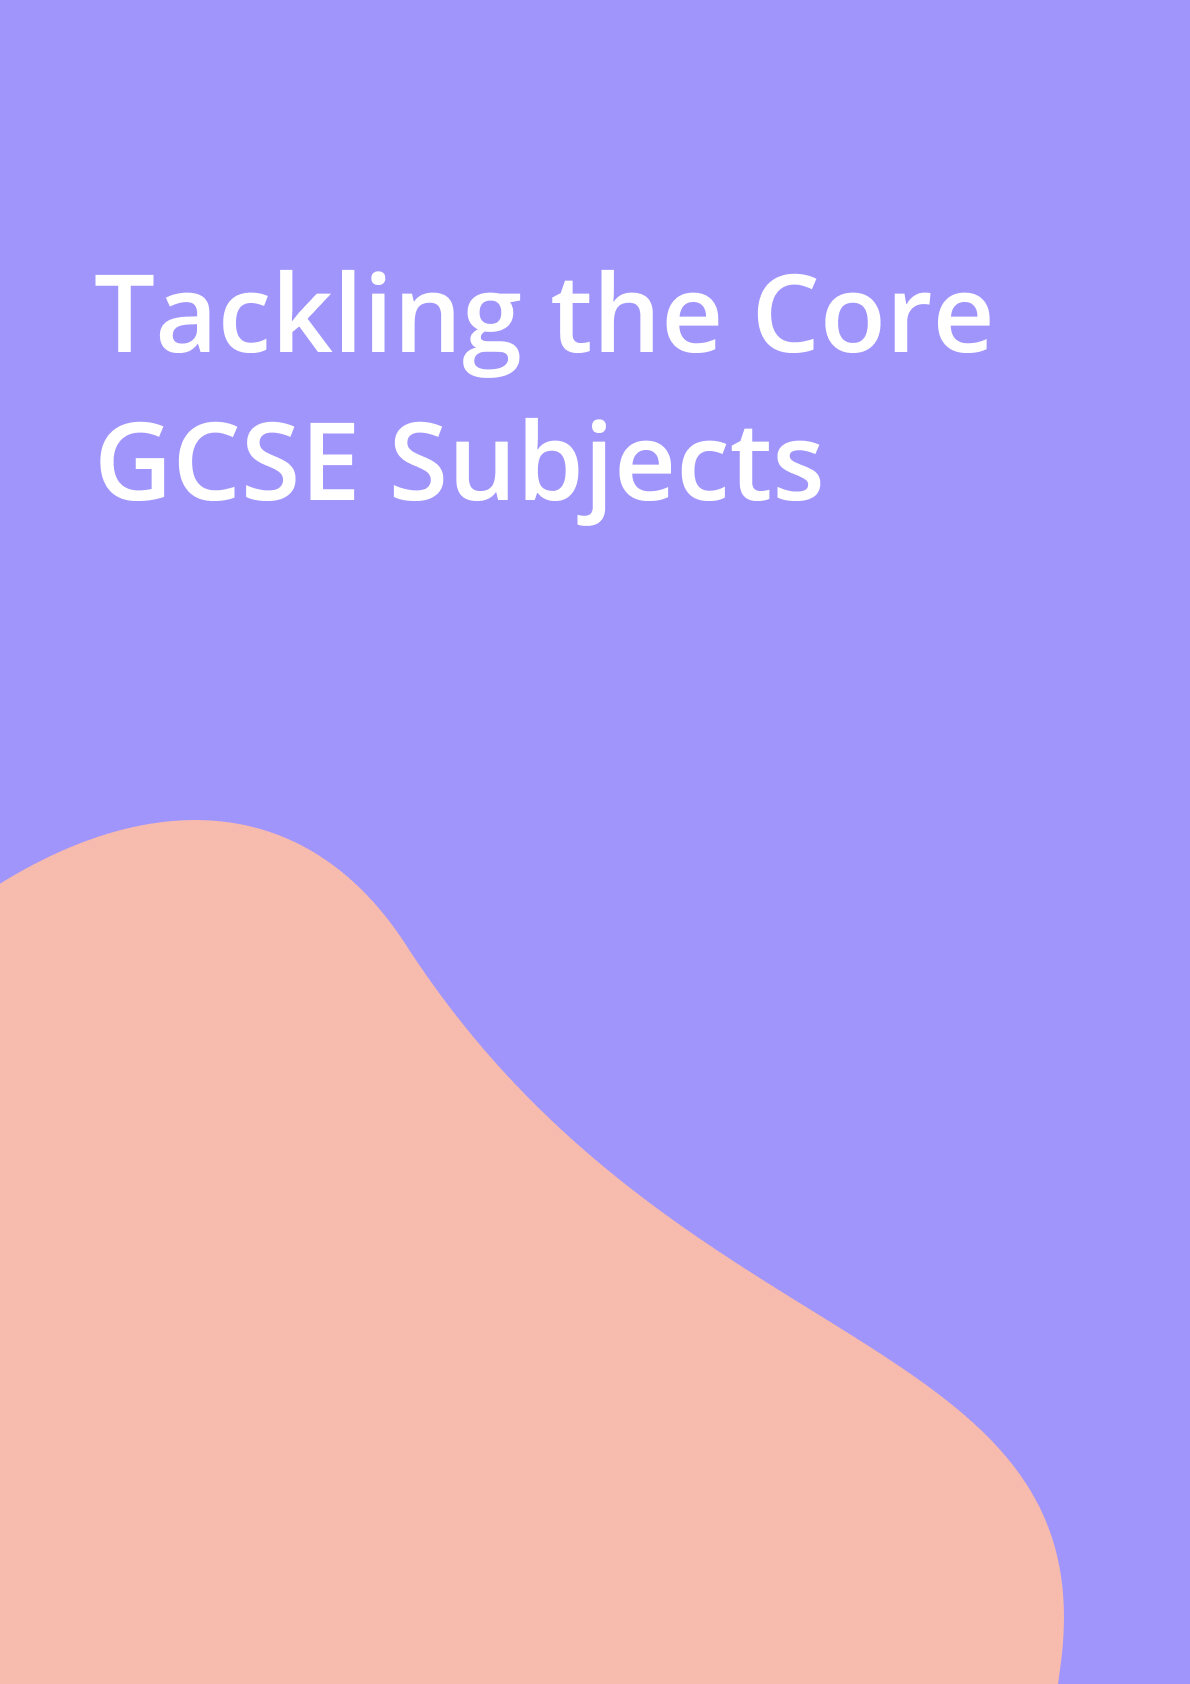 14 Tackling the Core GCSE Subjects.jpg